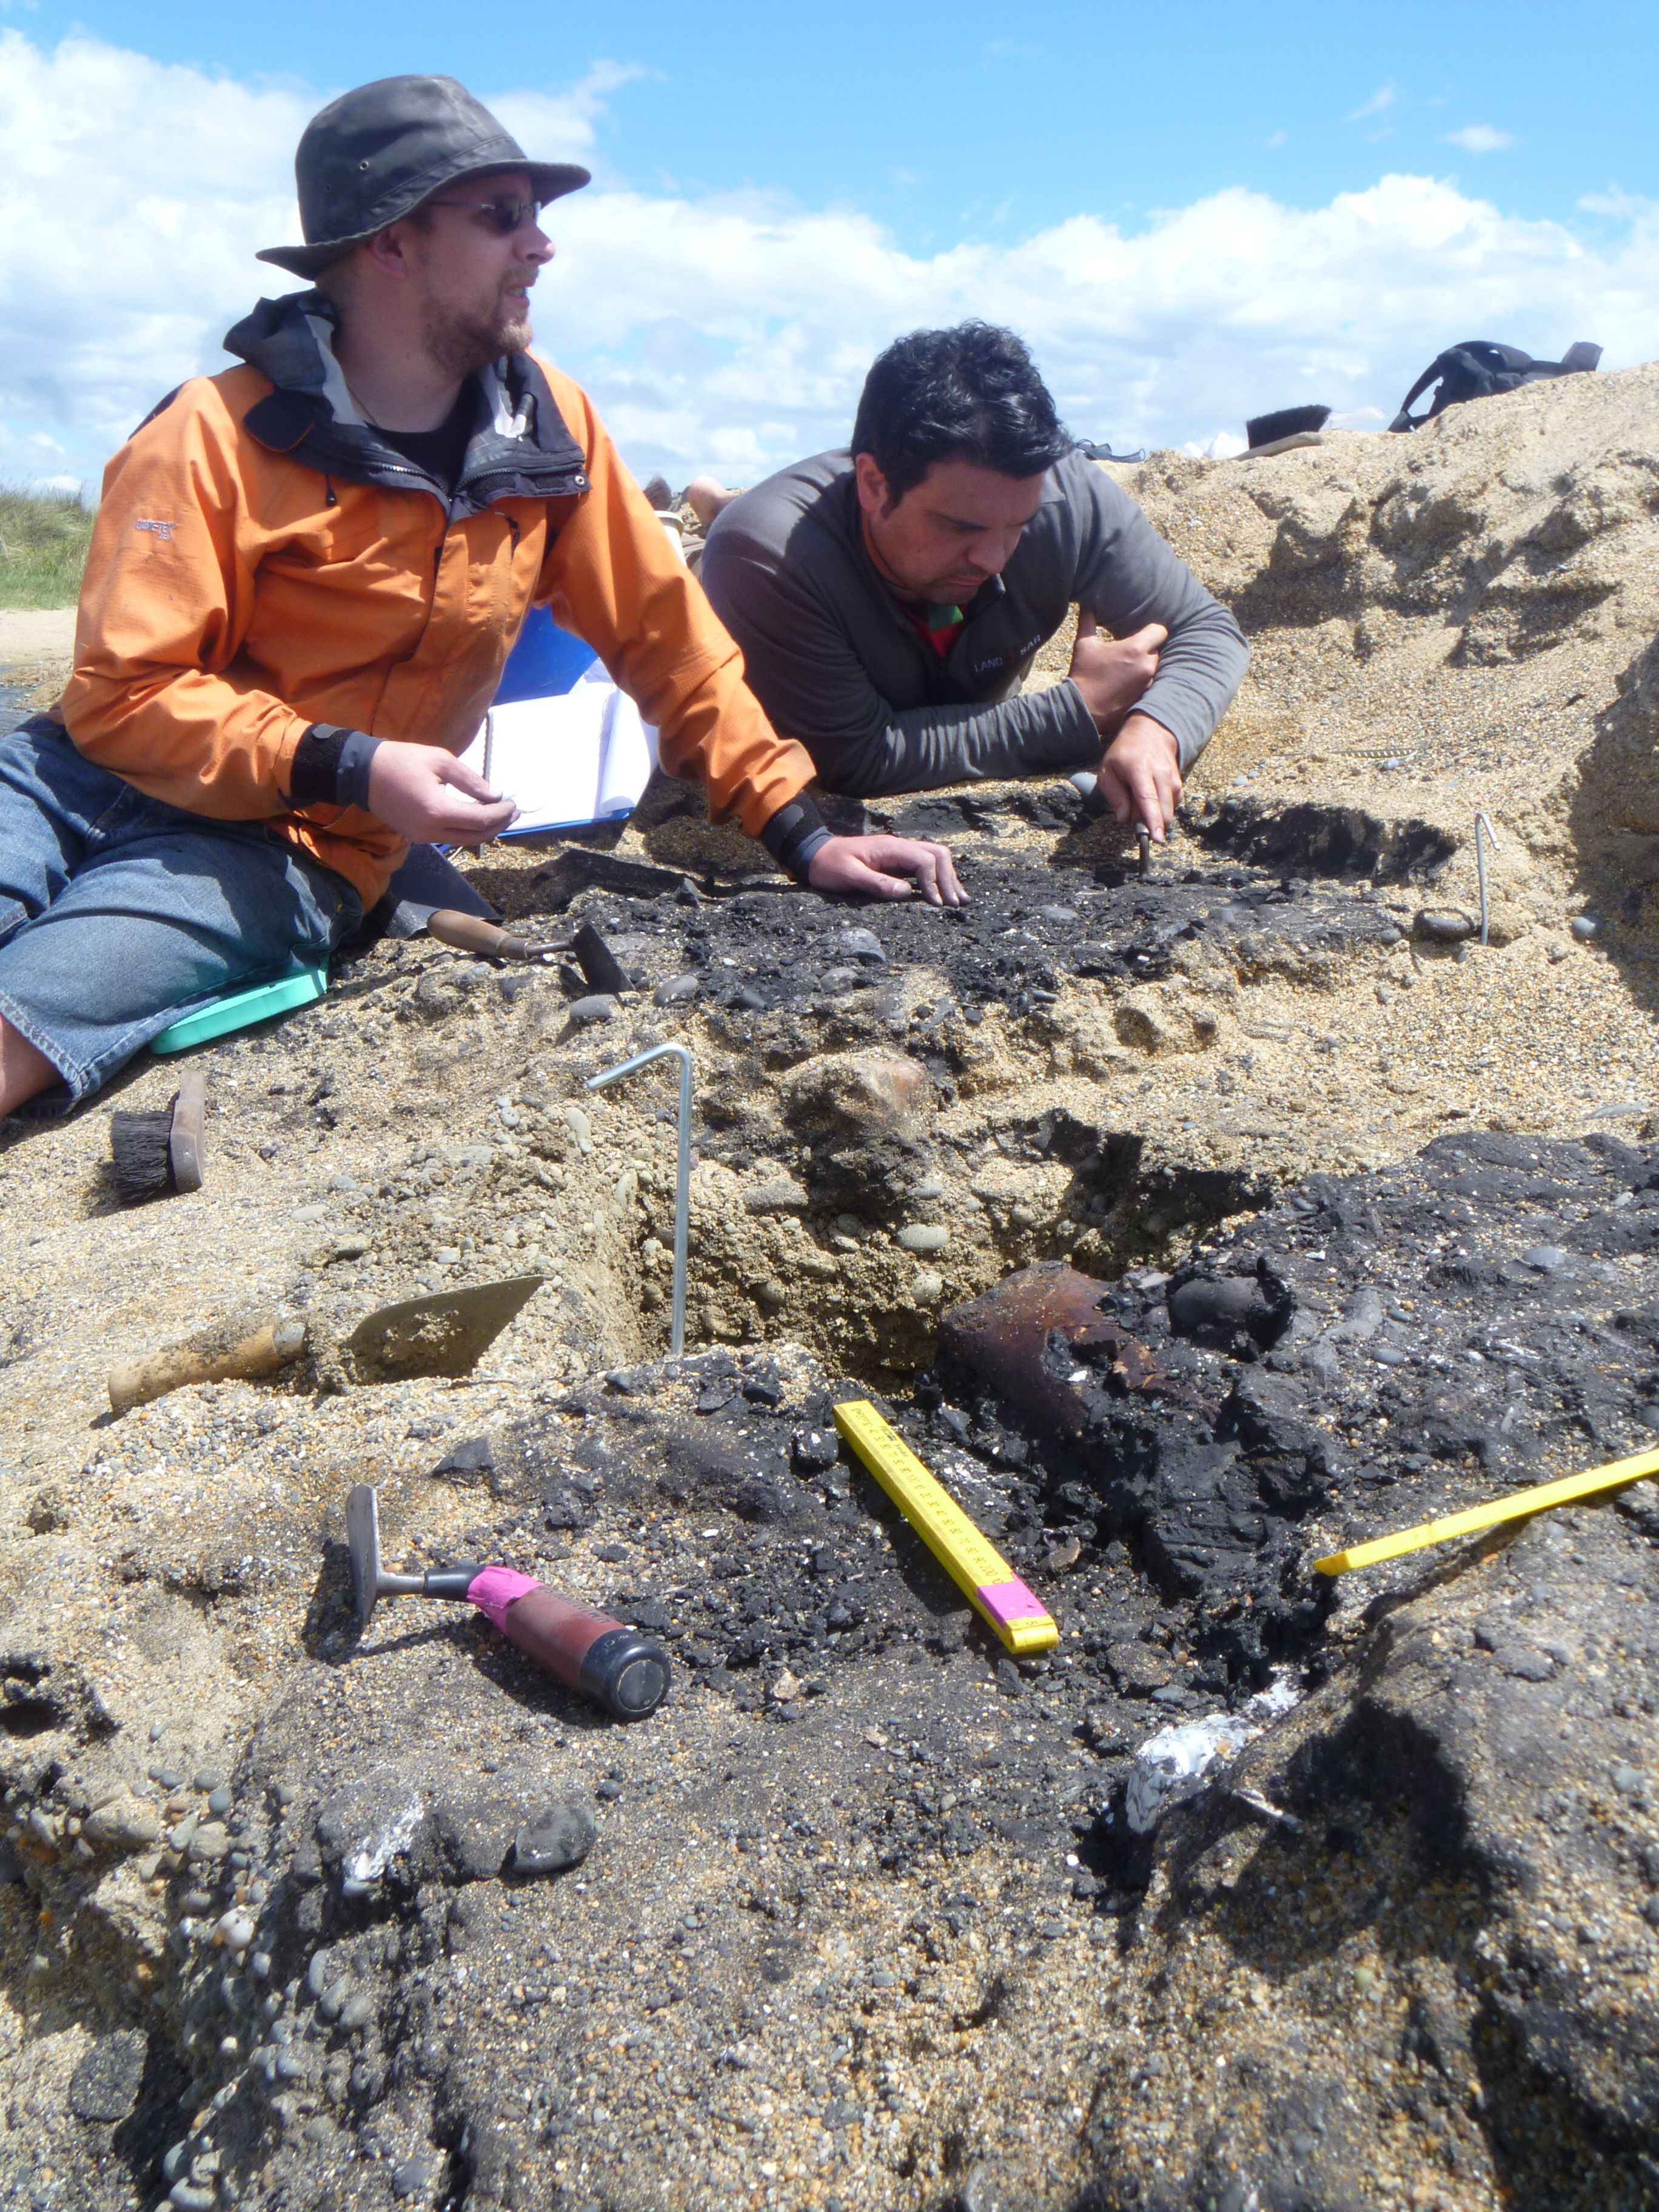 Nic Rawlence and Kyle Davis (Ngai Tahu iwi member) excavating a midden at Awamoa, New Zealand (Photo by Shar Briden)